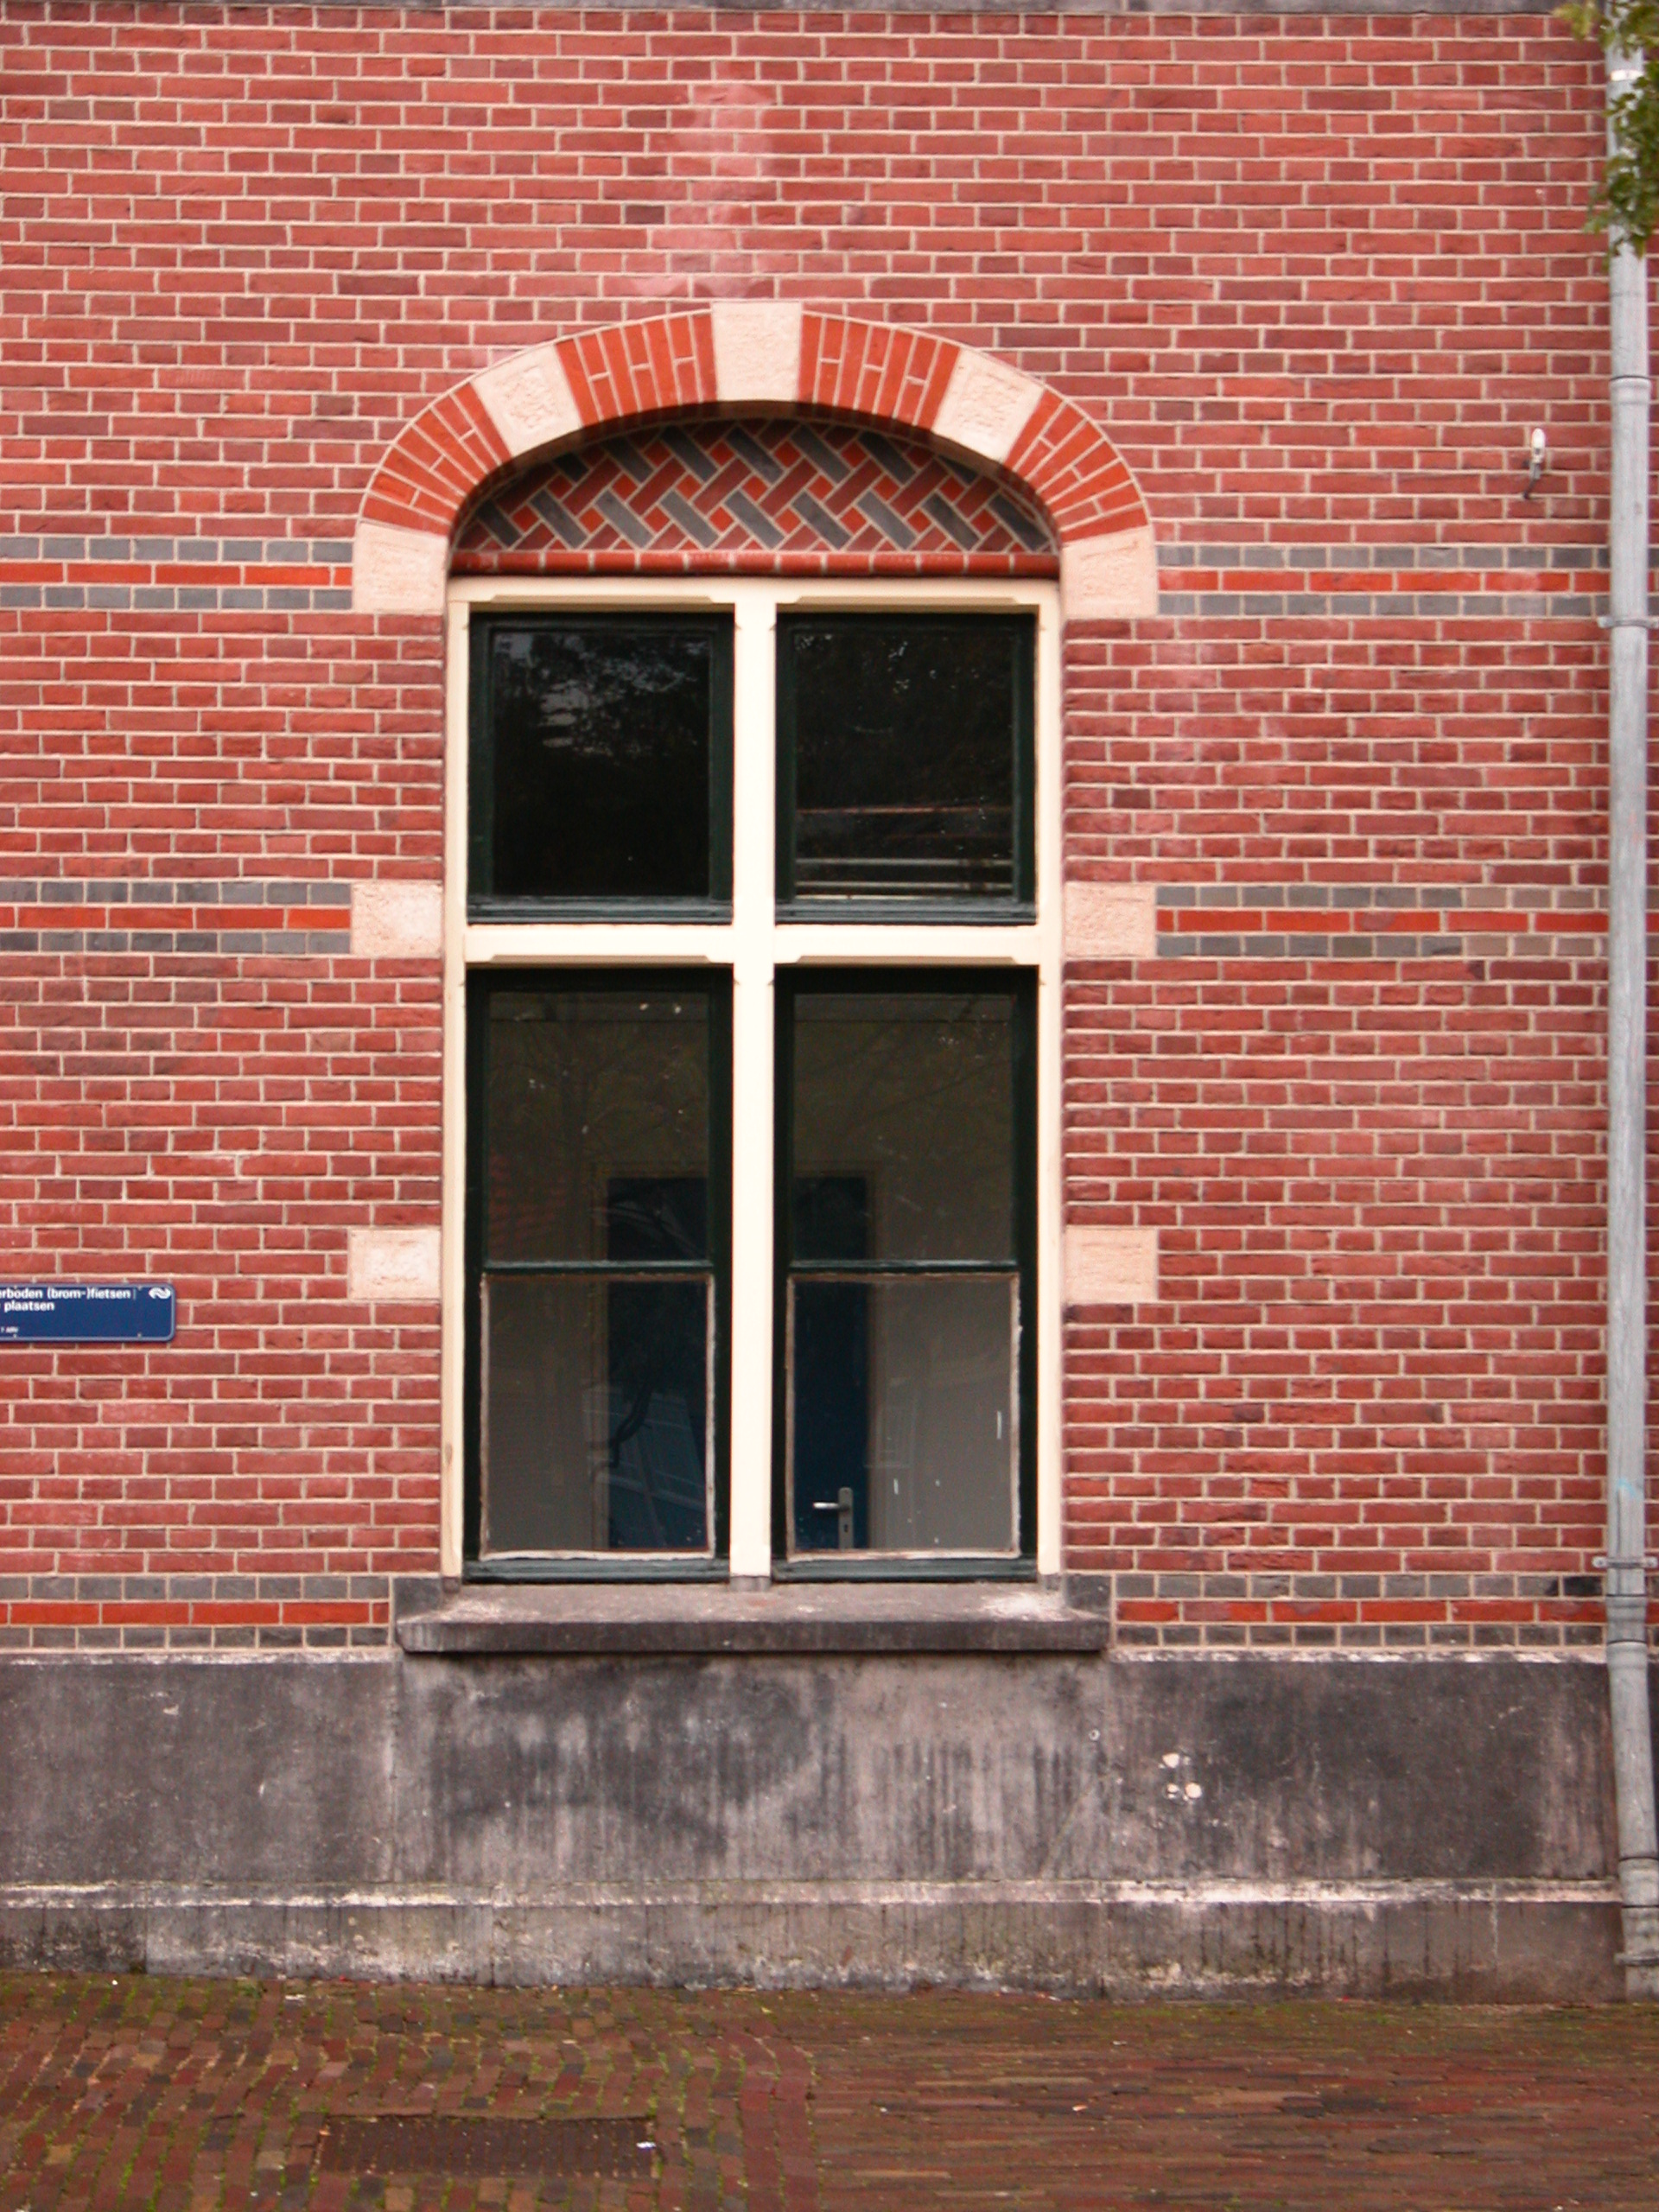 Image*After : photo : window wall brick bricks old dutch architecture